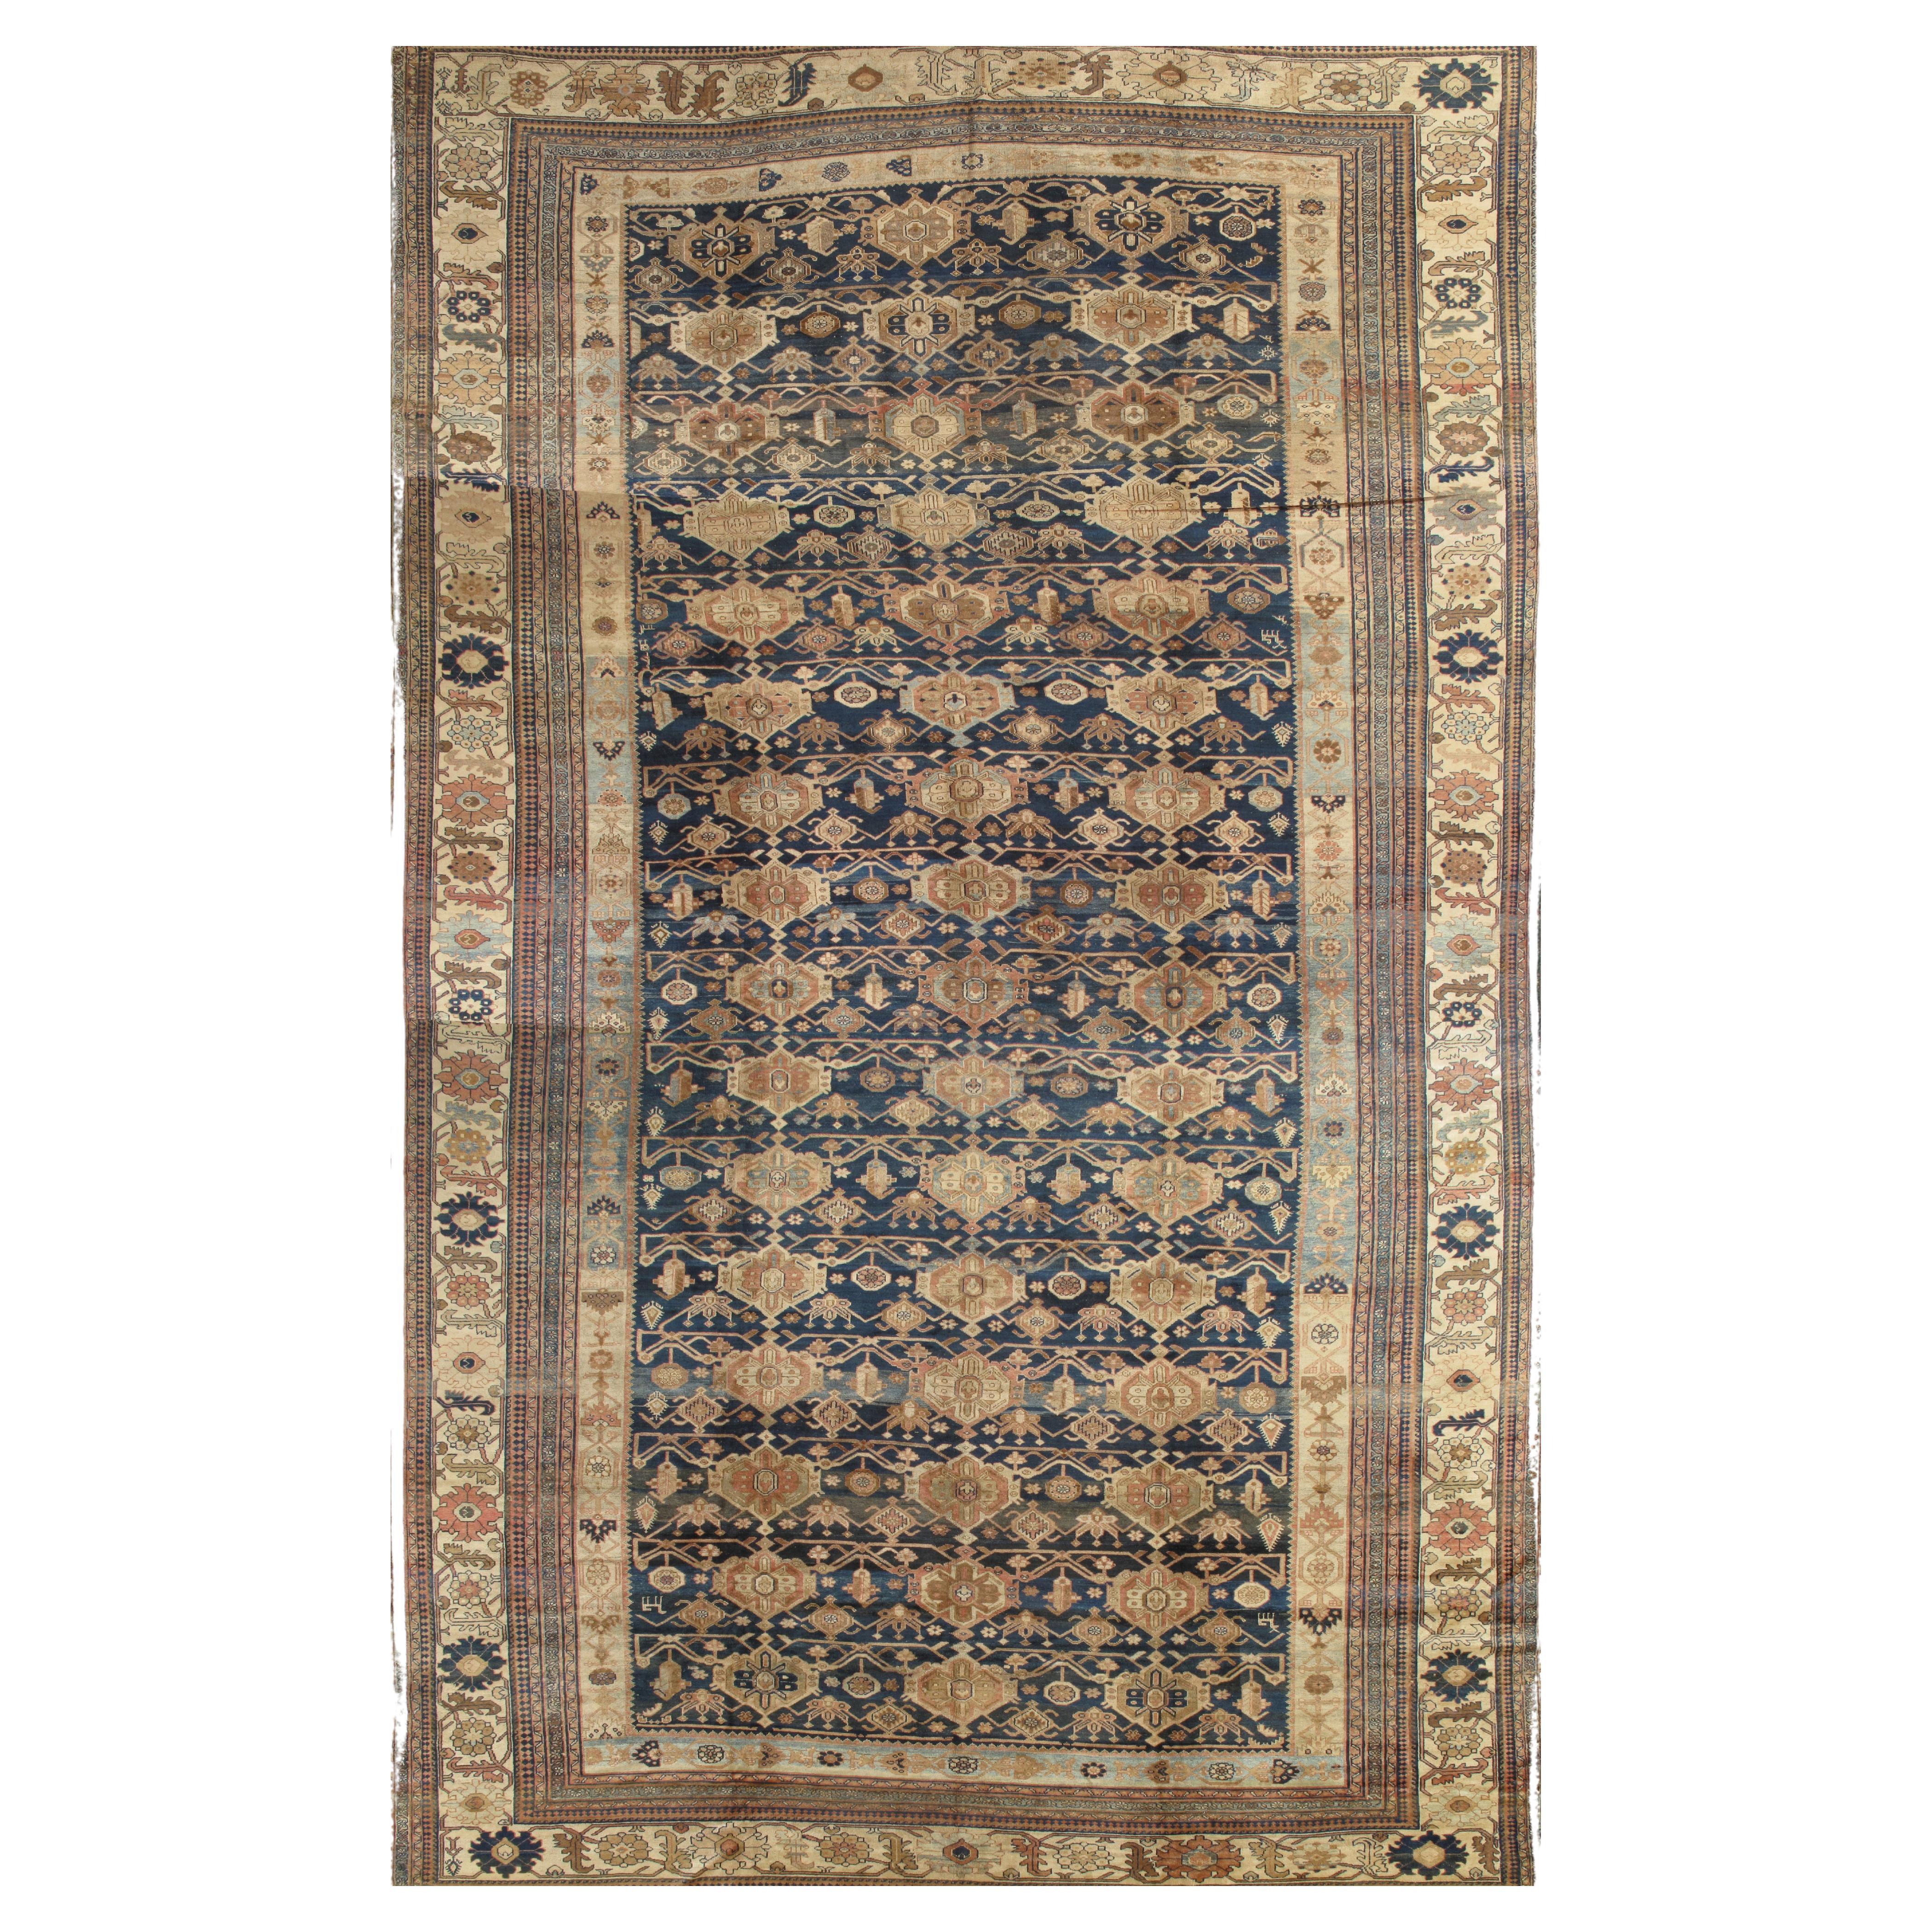 Antique Persian Malayer Carpet, Handmade Oriental Rugs, Navy, Orange, Cream For Sale